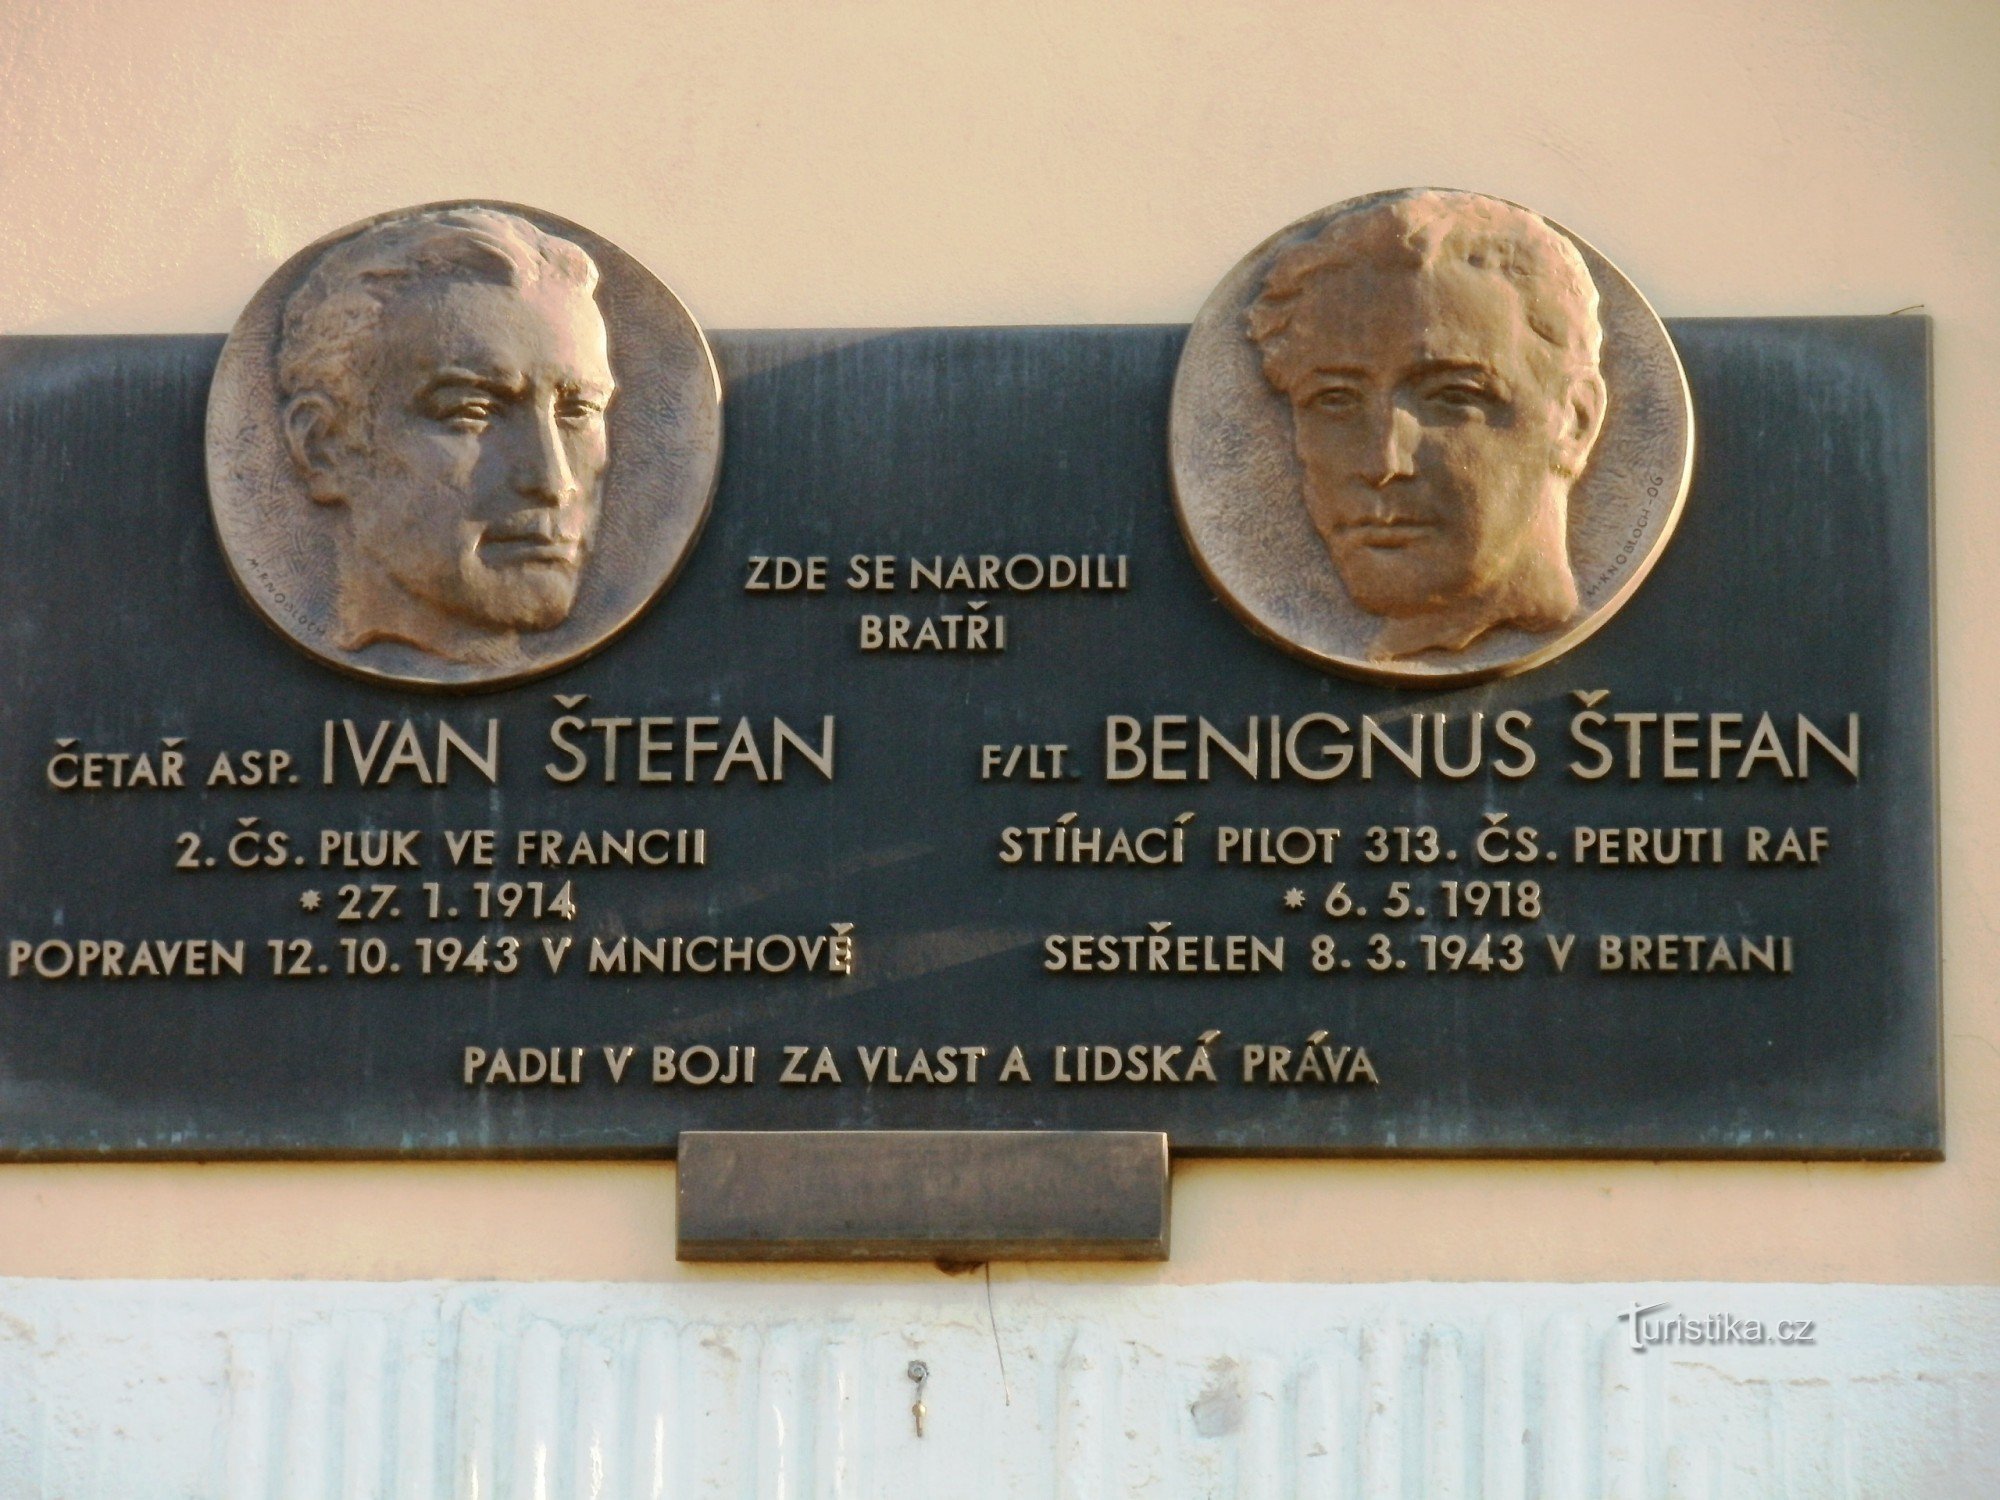 Hradec Králové - targa commemorativa dei fratelli Štefan